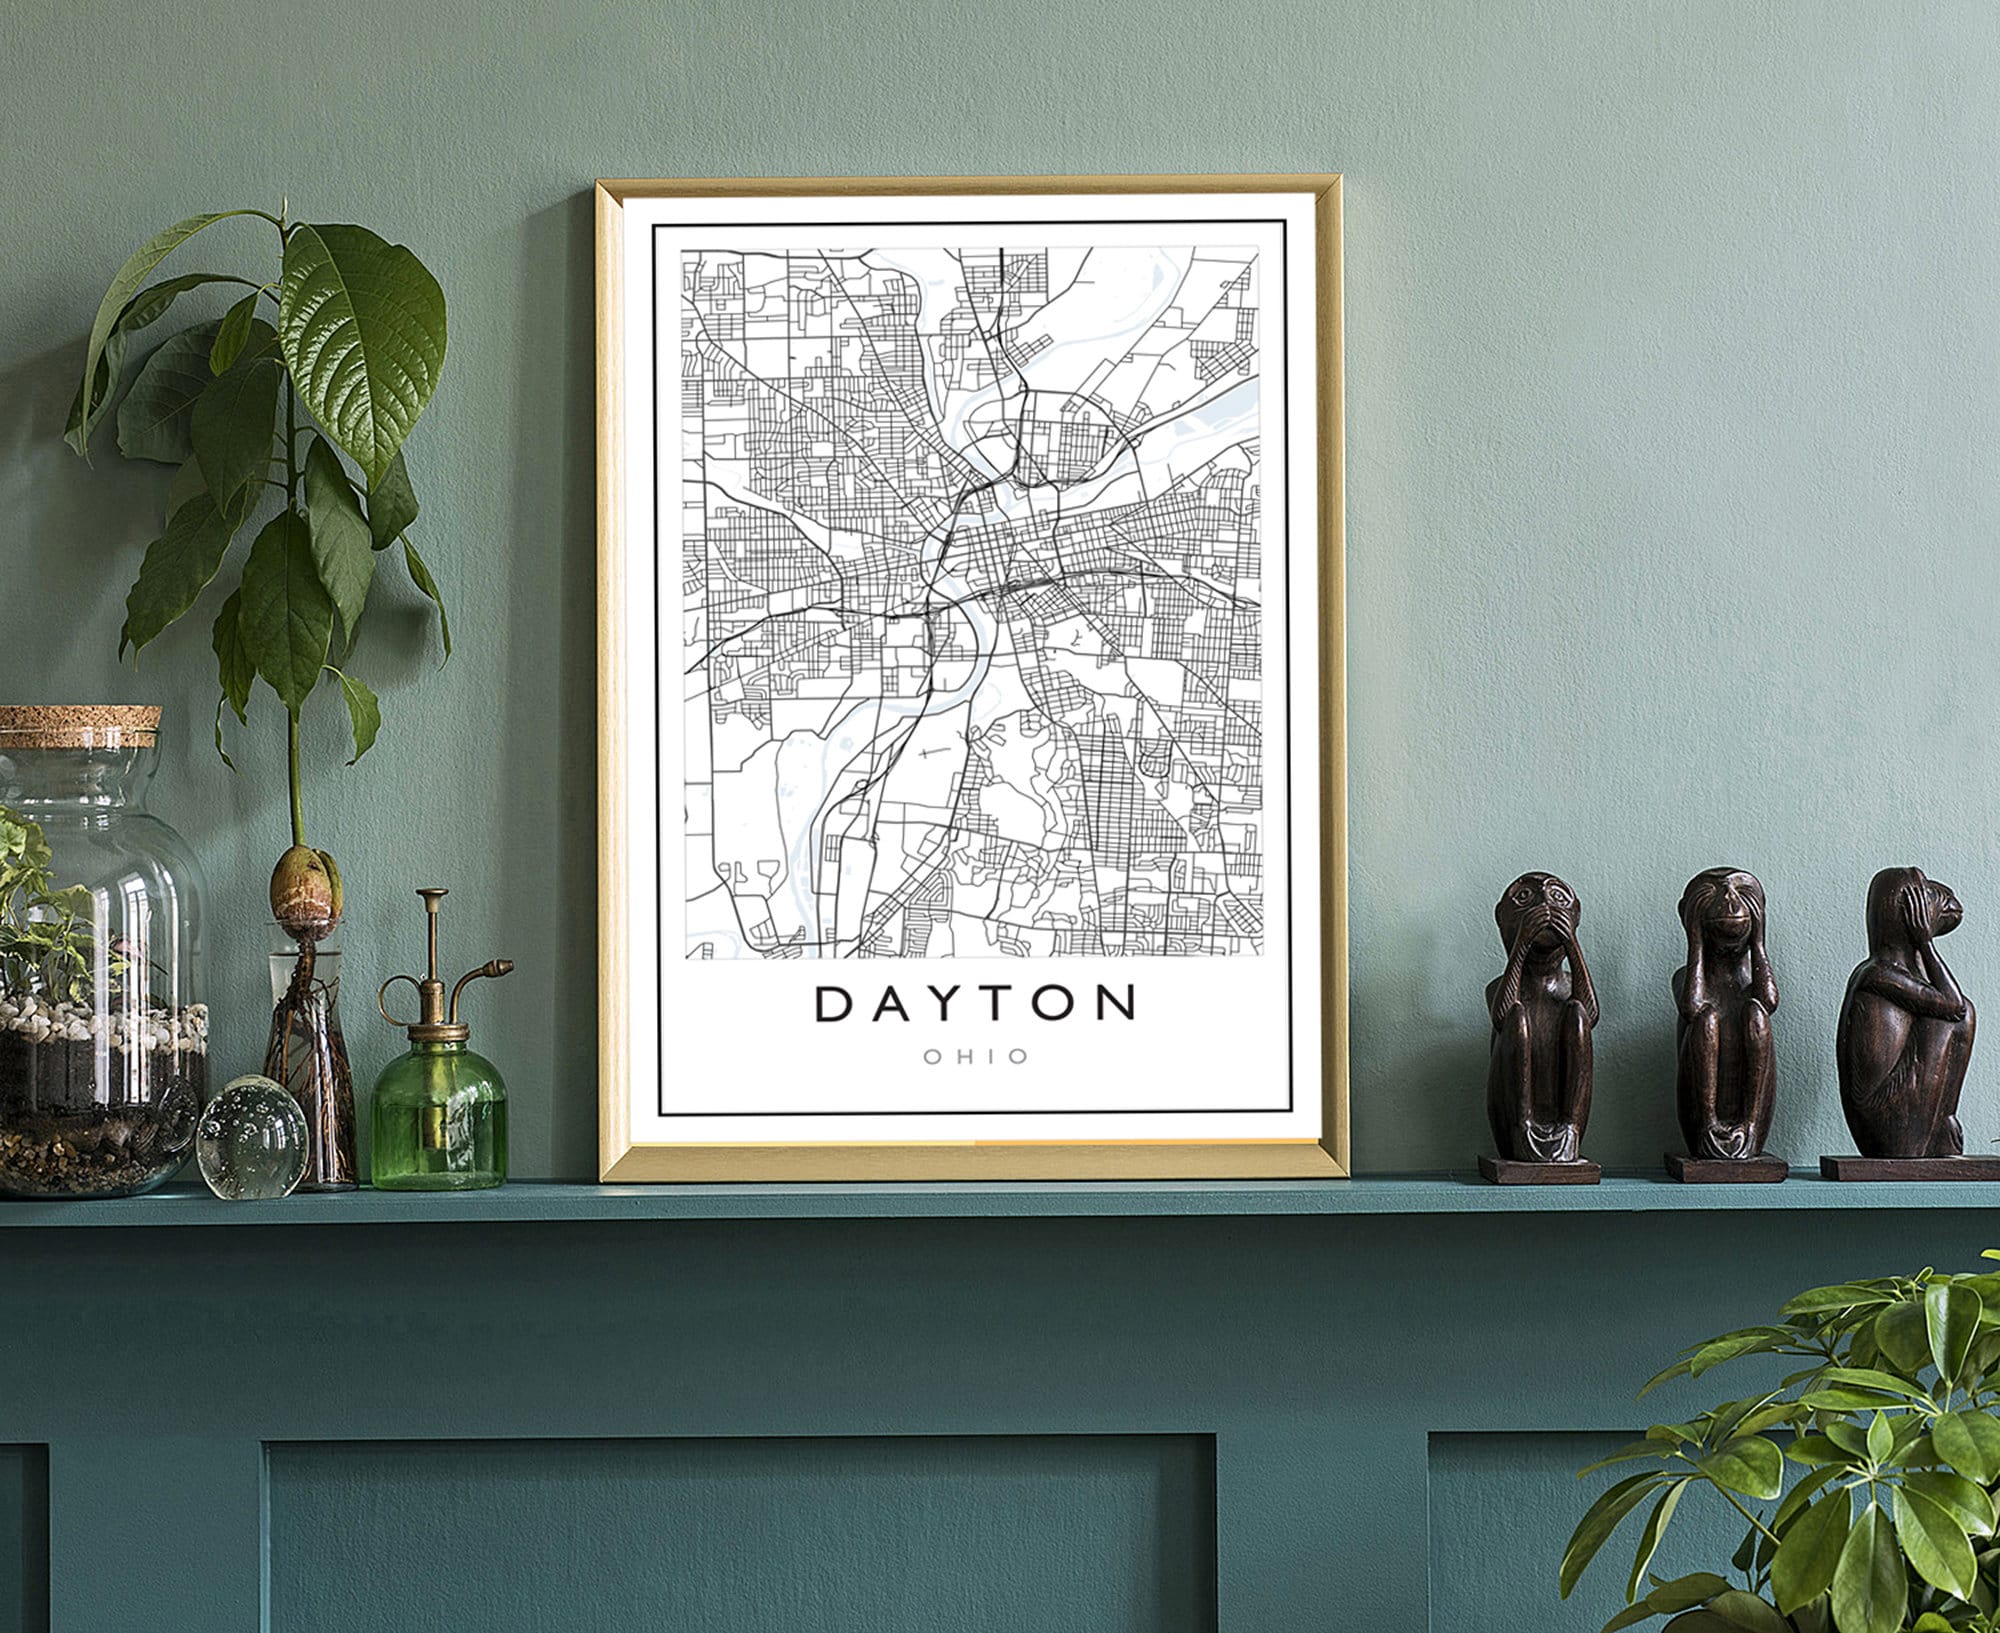 Dayton Ohio City Map, Ohio City Road Map Poster Print, City Street Map Print, Modern US City Map, Home Art Decoration, Office Wall Art Print